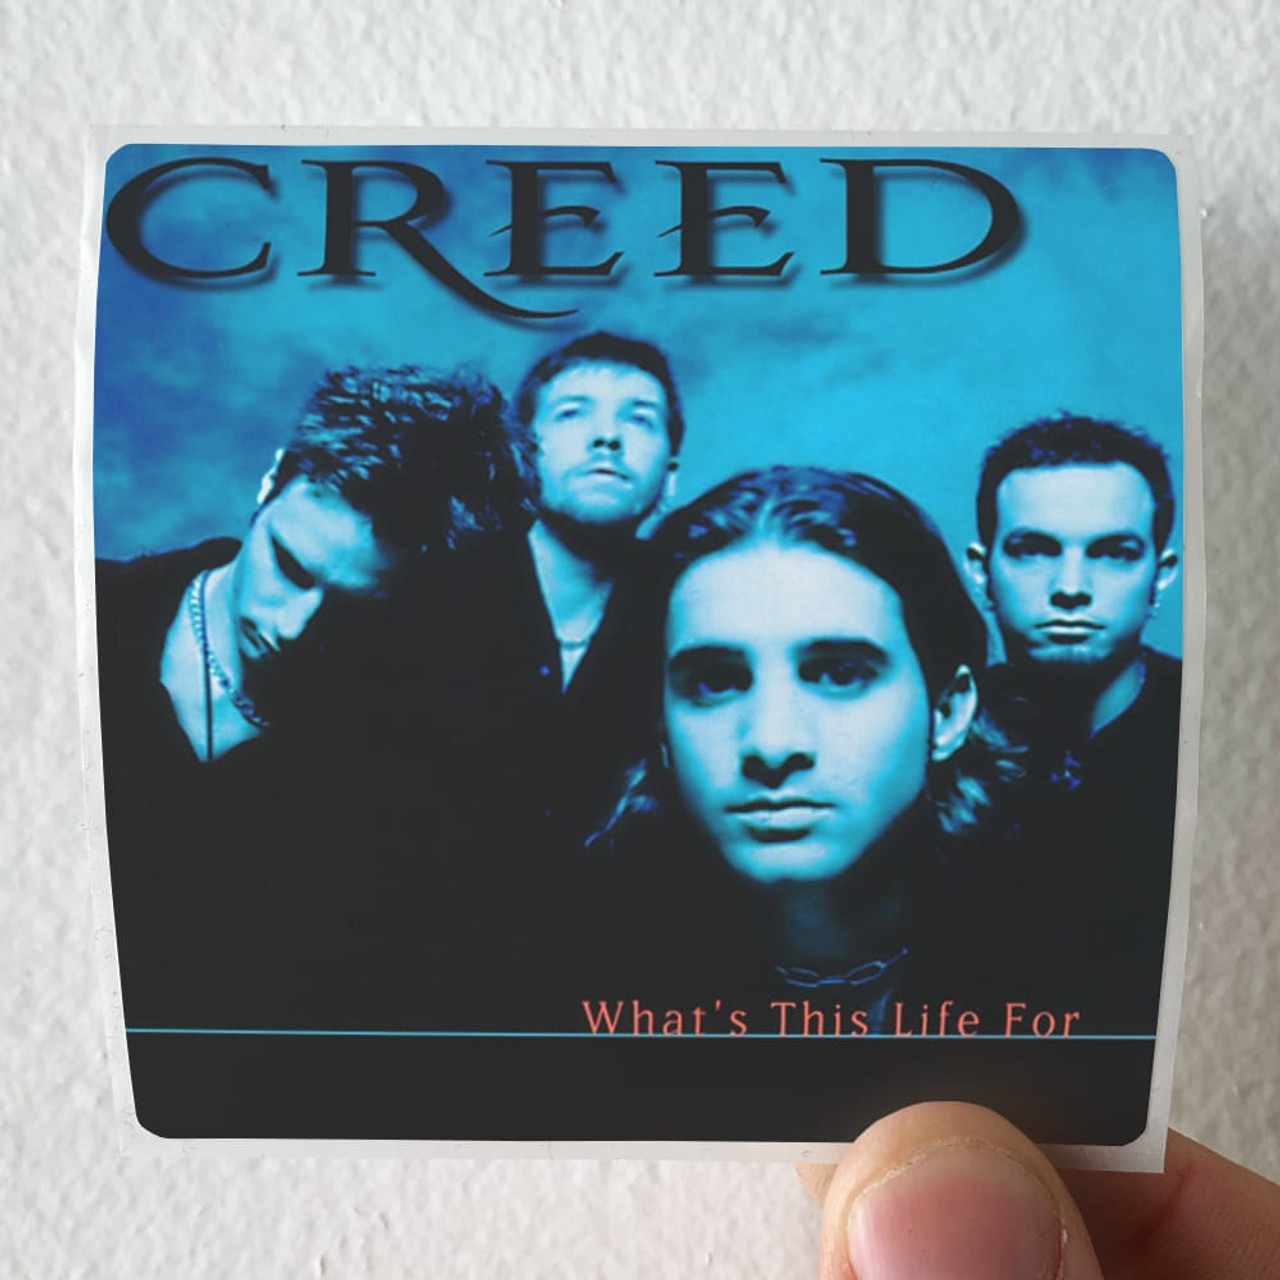 Creed My Sacrifice Album Cover Sticker